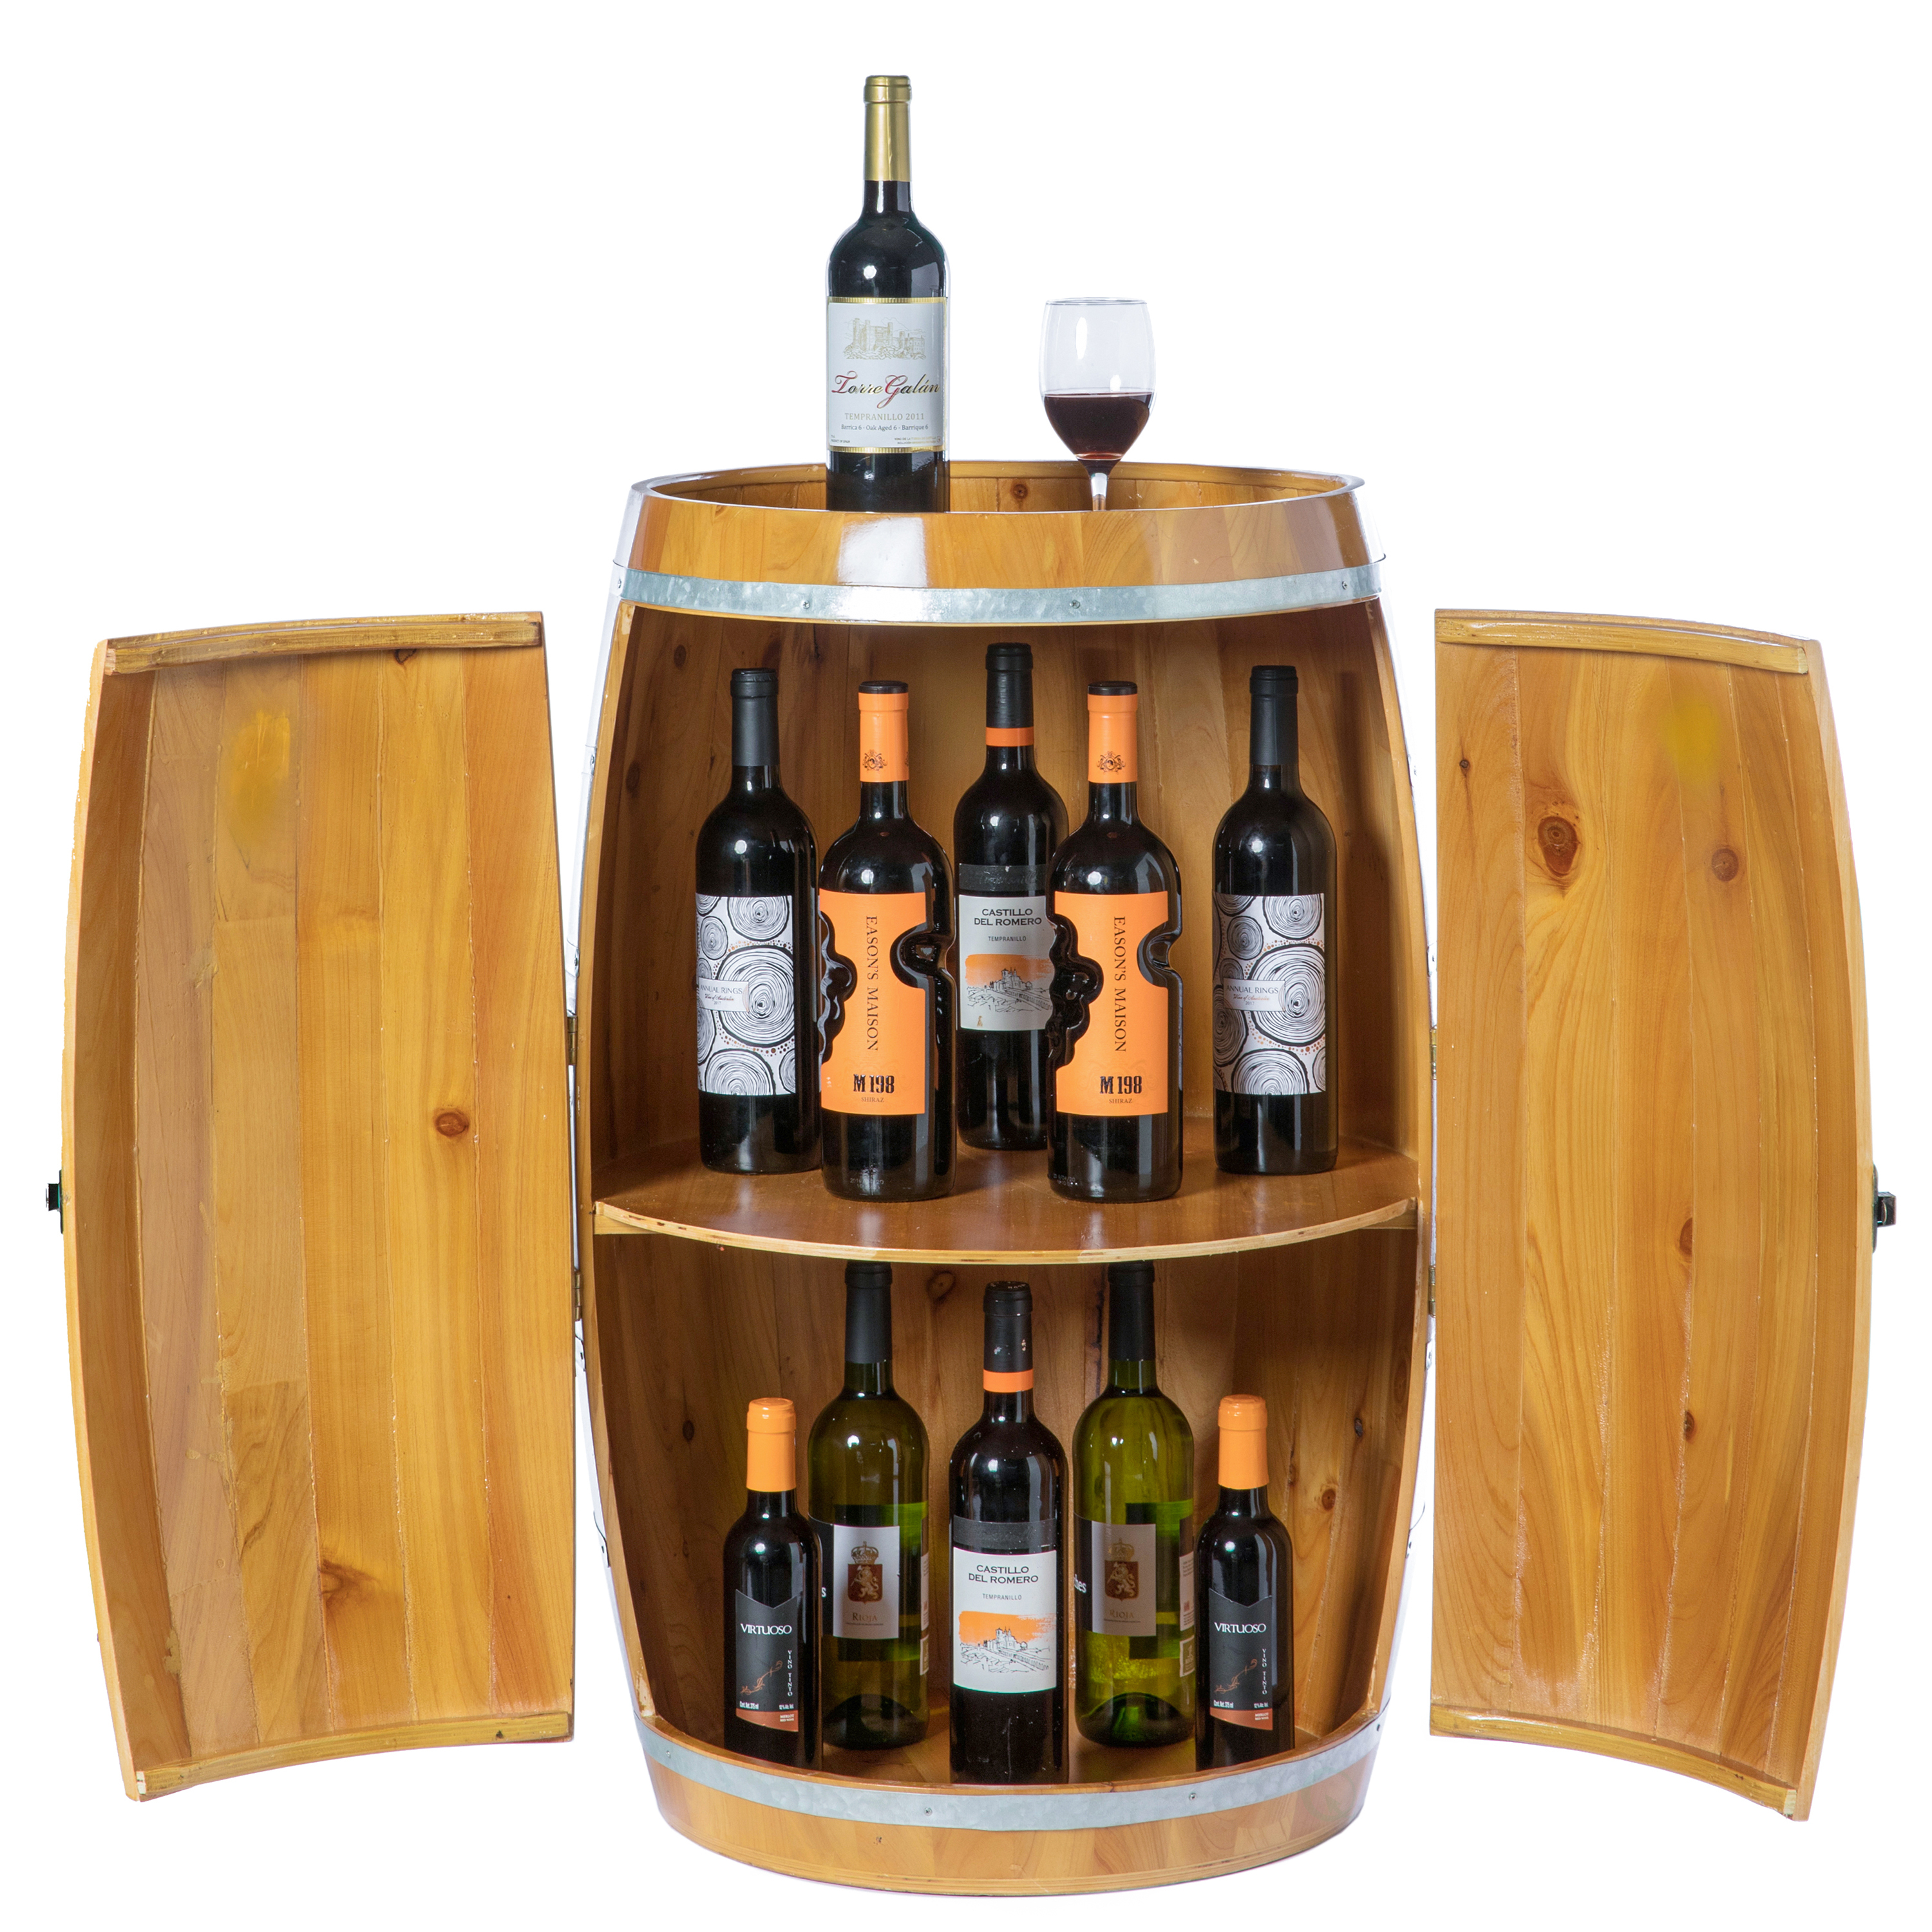 Wooden Wine Barrel Shaped Wine Holder, Bar Storage Lockable Storage Cabinet